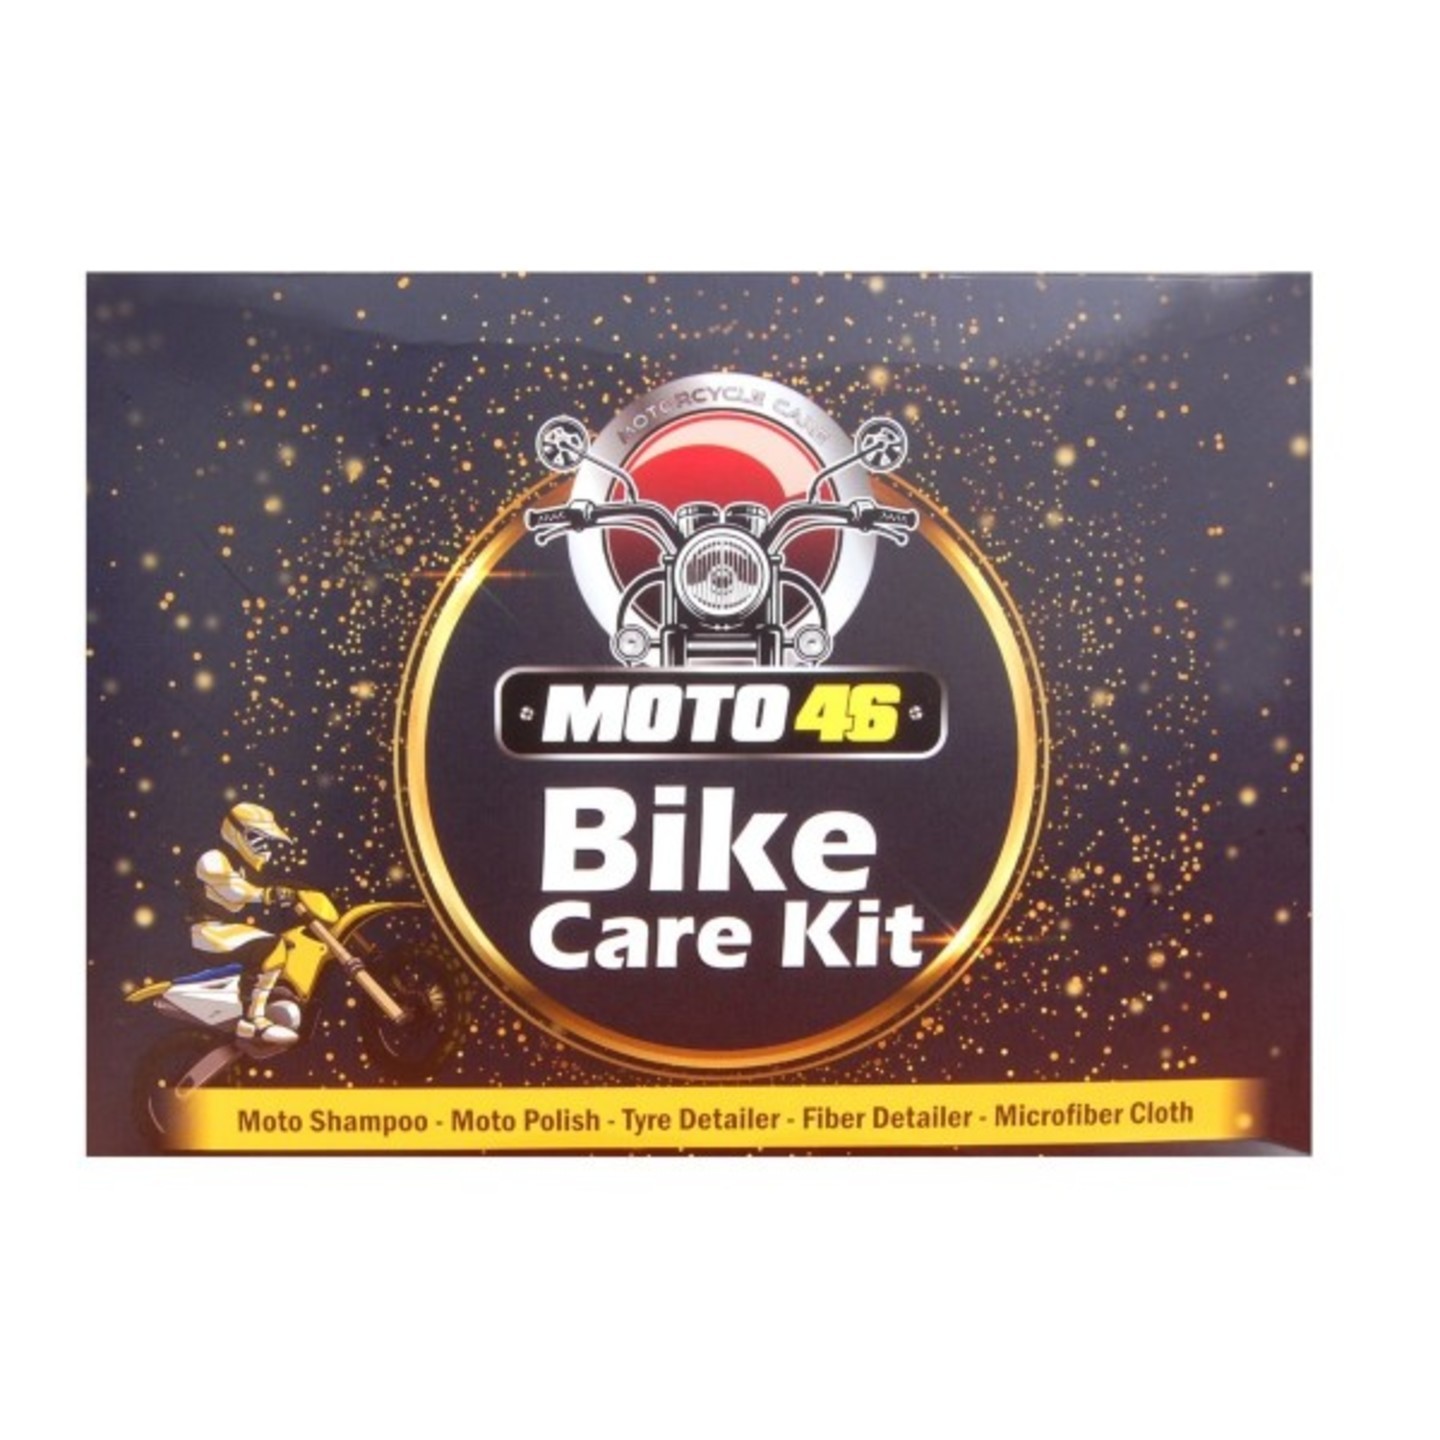 M46 BIKE CARE KIT - Value Pack